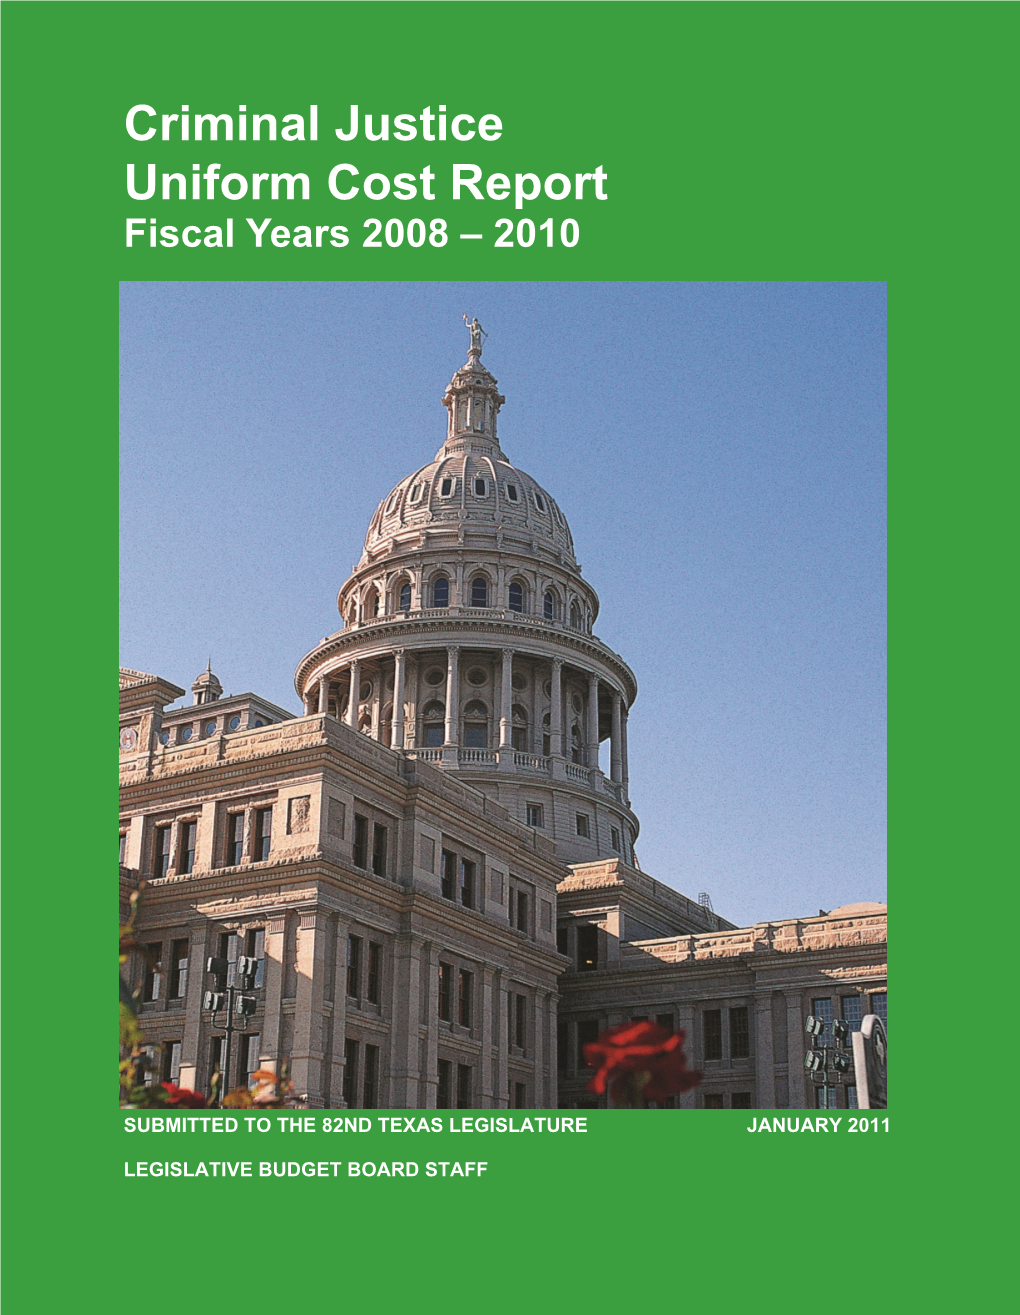 Criminal Justice Uniform Cost Report (January 2011)